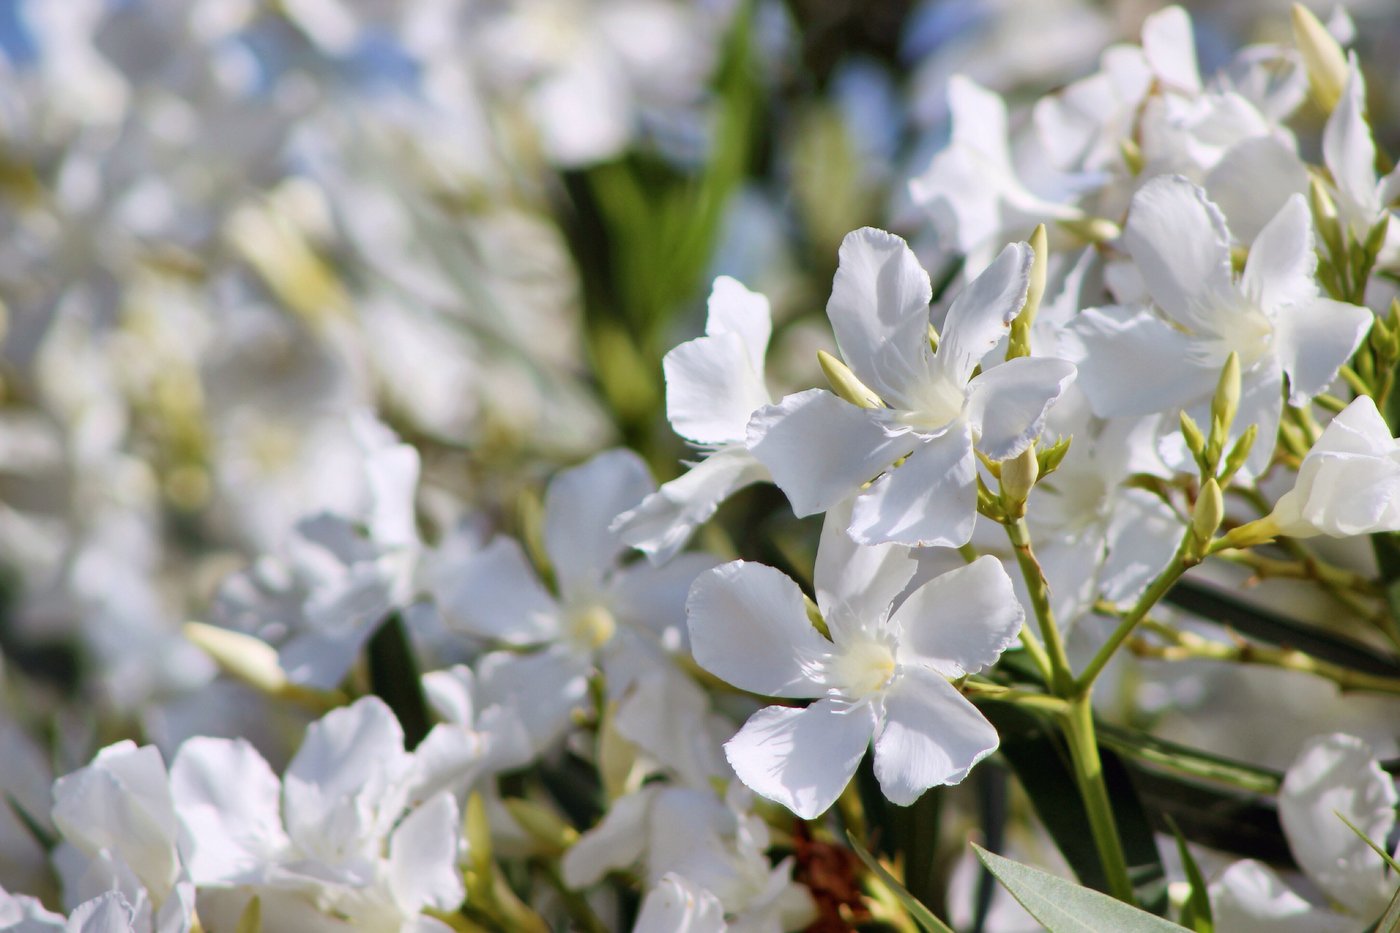 White oleander flowers